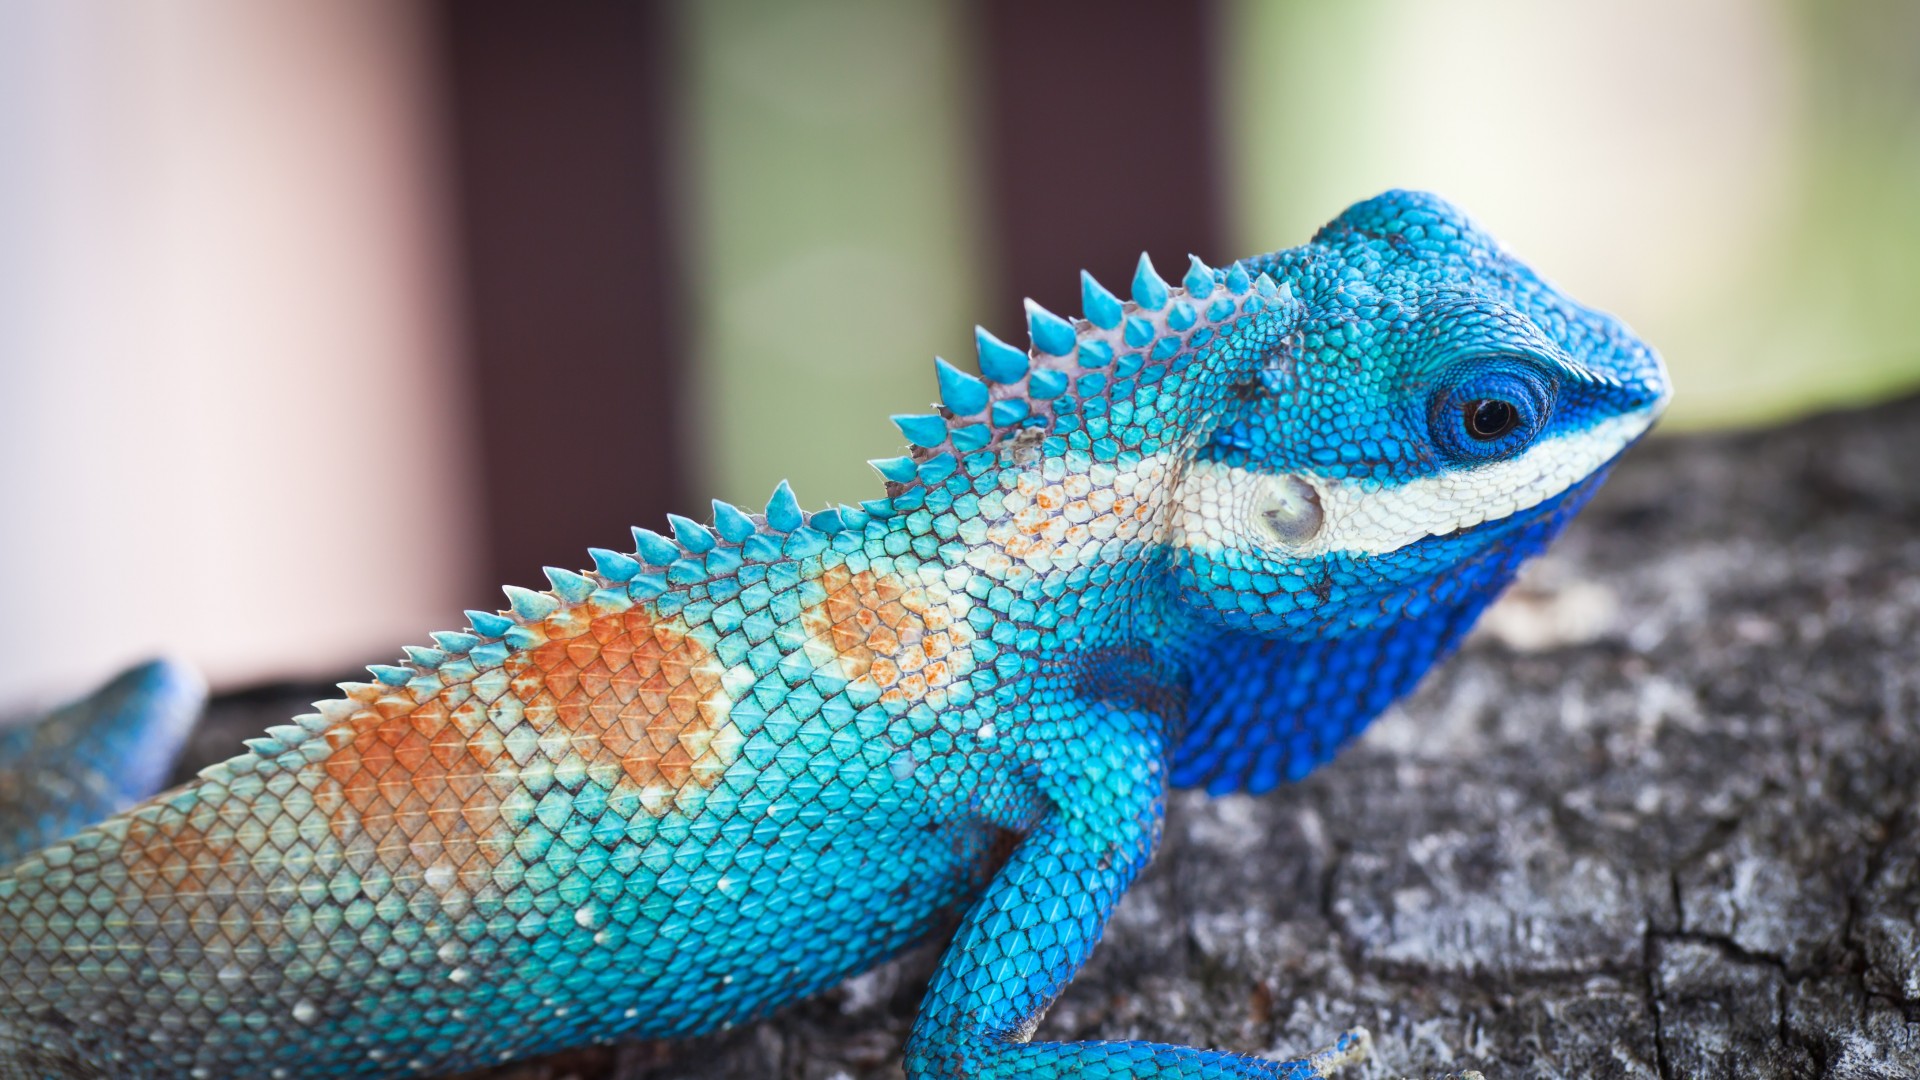 Lacerta viridis, Blue iguana, tree, nature, reptiles, animal, lizard (horizontal)